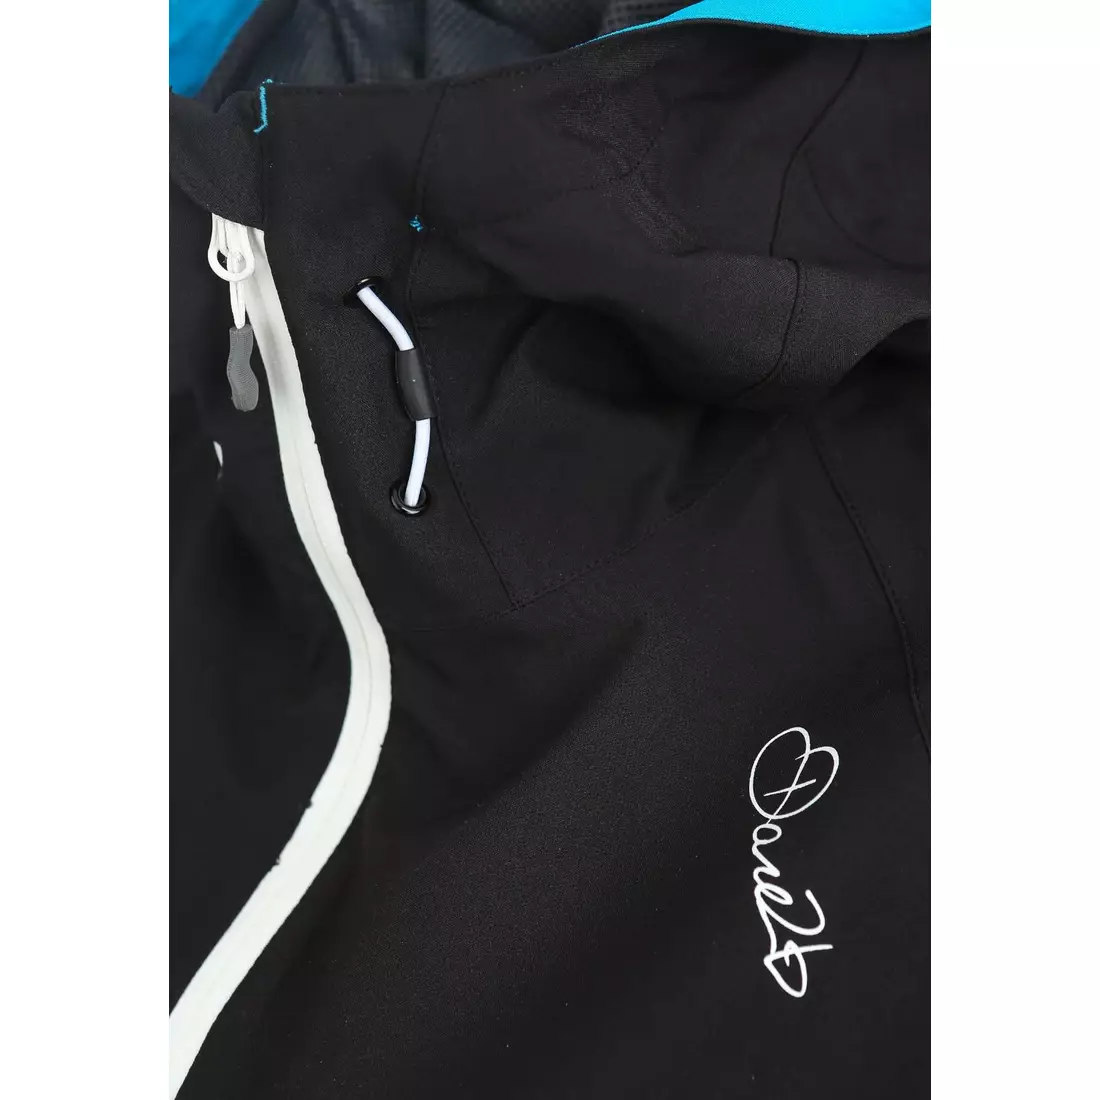 DARE2B women's rain jacket PAVILLION DWW102-800, color: black